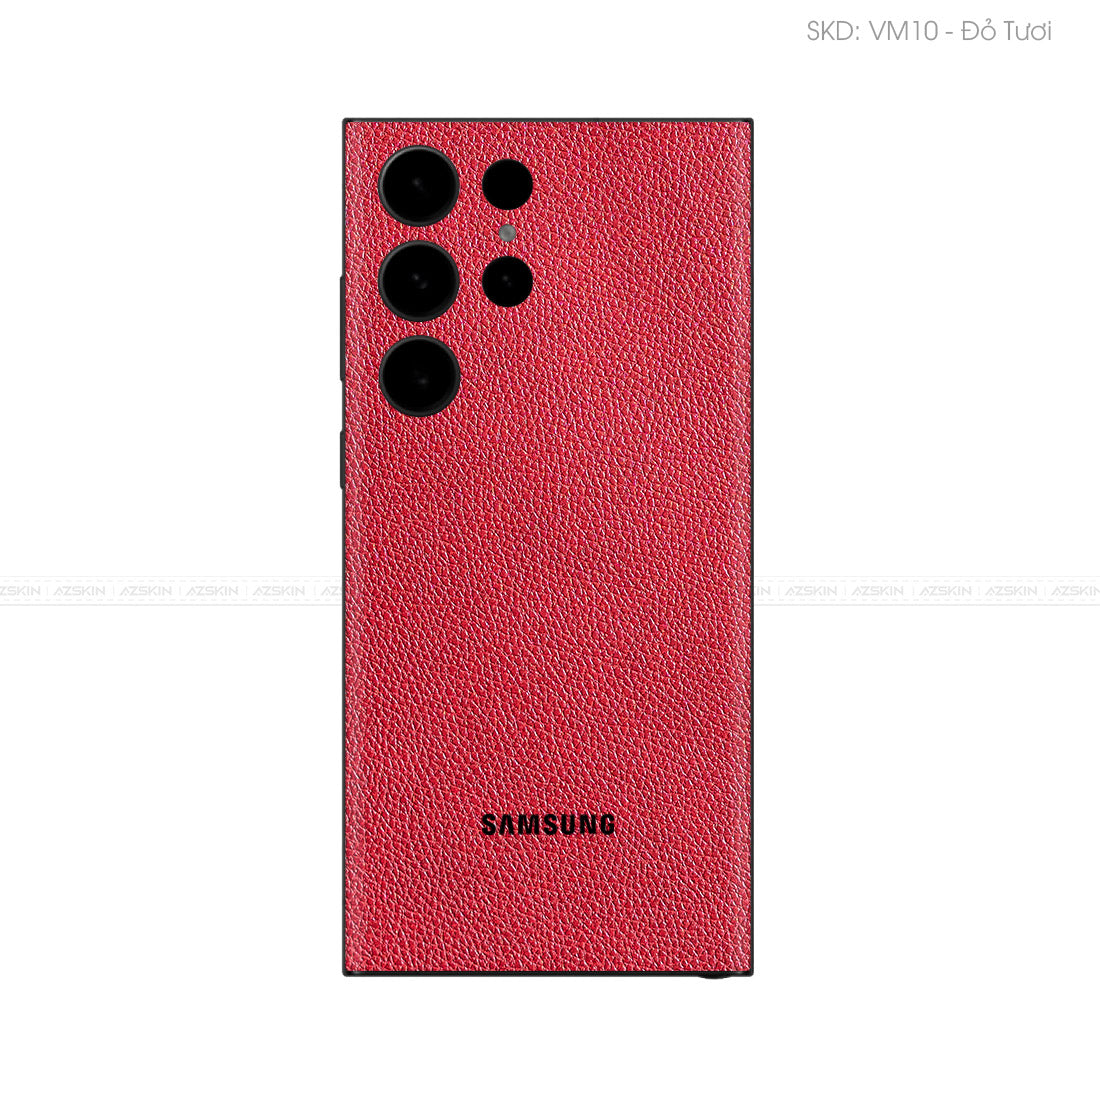 Miếng Dán Da Samsung S22 Series Vân Mil Đỏ | VM10